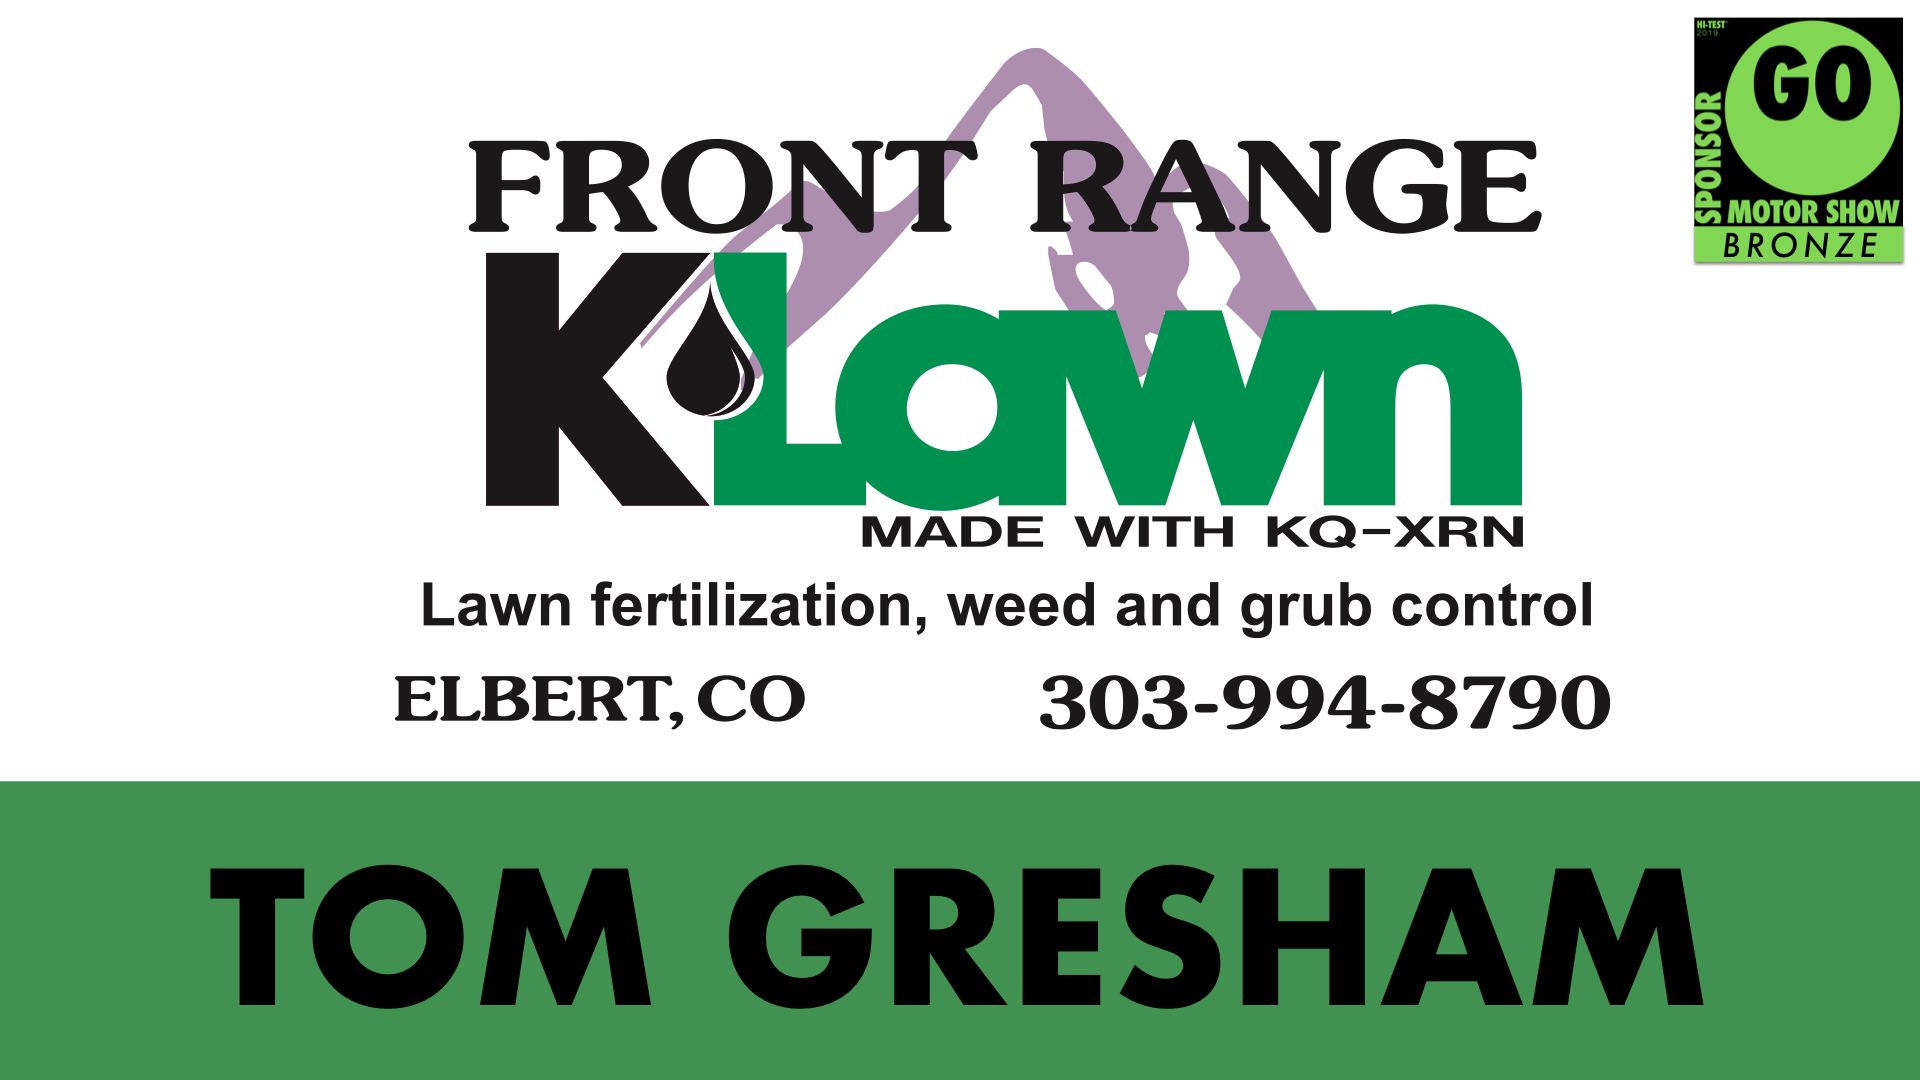 Front Range K-Lawn Tom Gresham